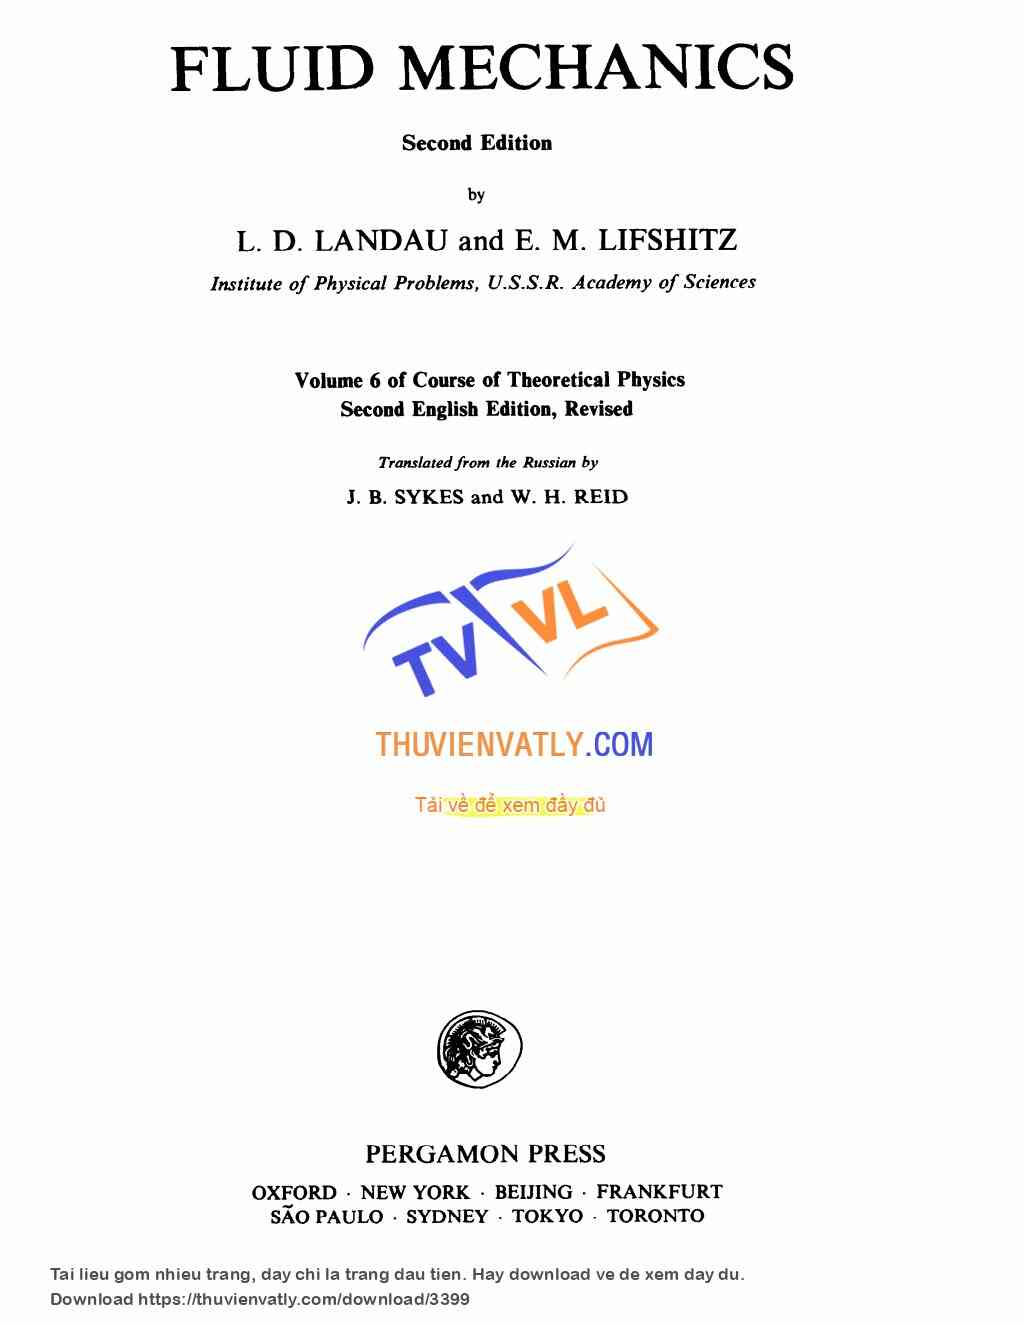 Landau L.D., Lifshitz E.M. Course of Theoretical Physics. Vol. 06. Fluid Mechanics